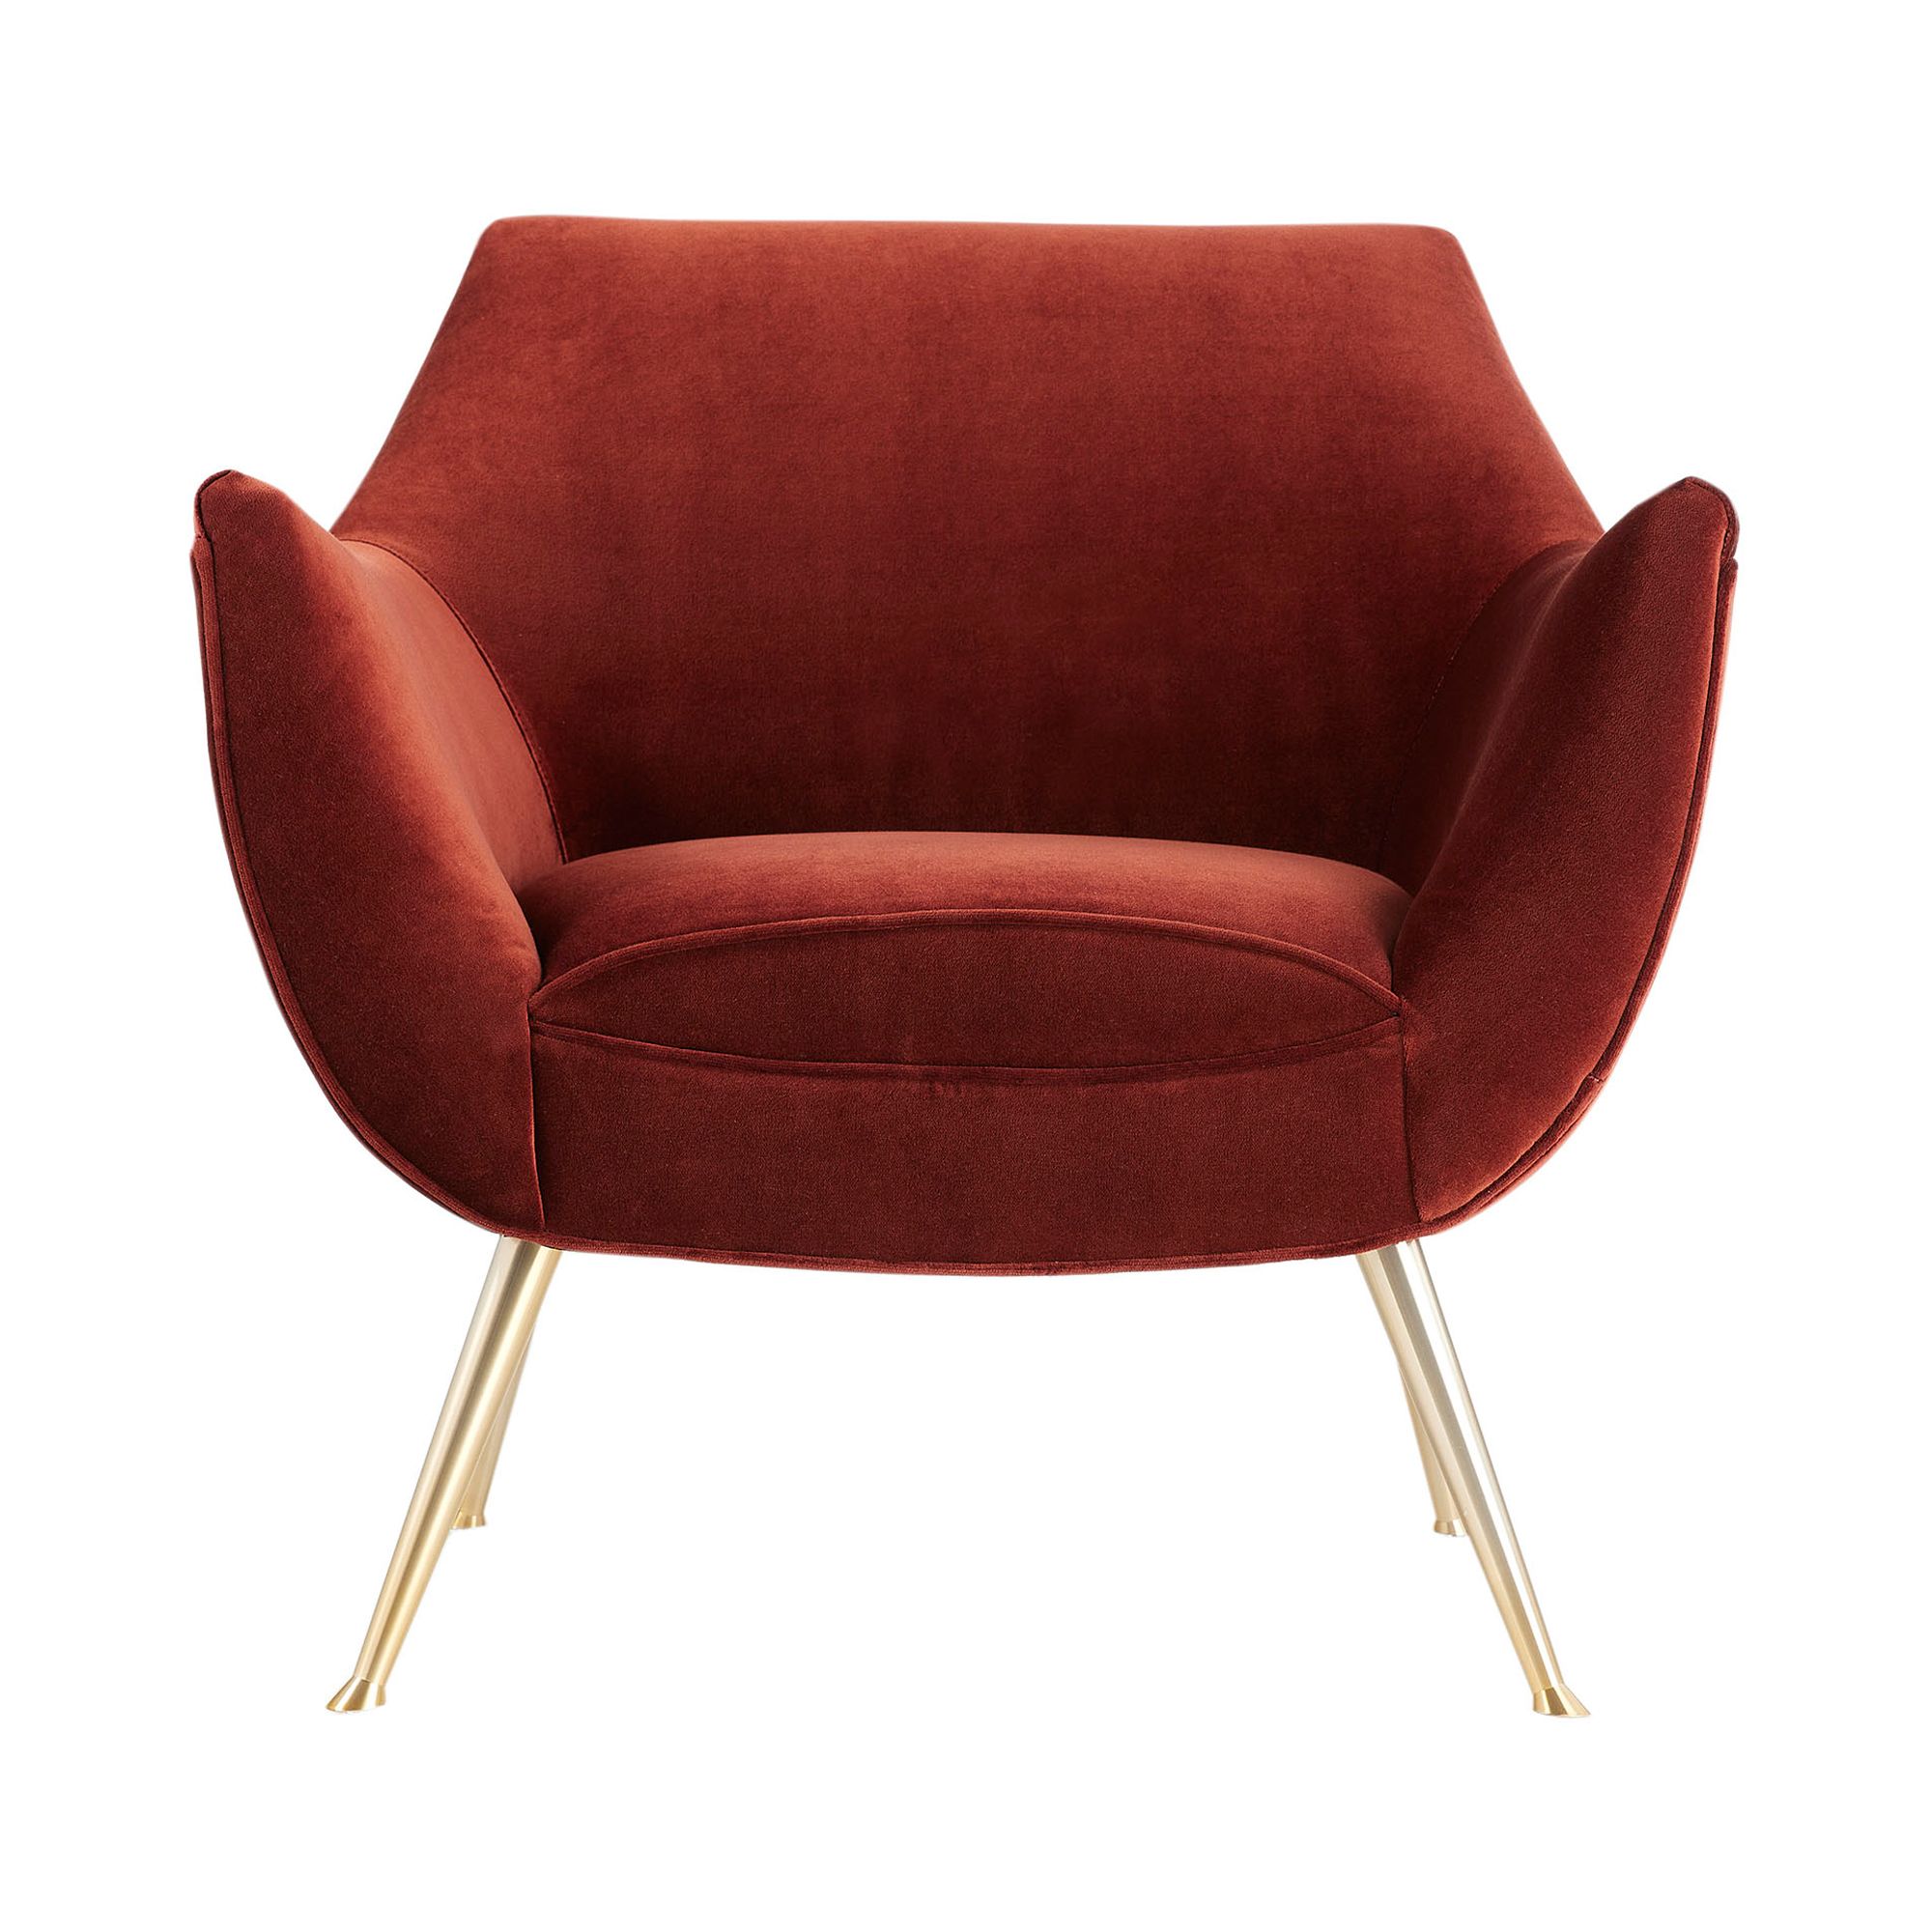 Купить Кресло Leandro Lounge Chair Paprika Velvet в интернет-магазине roooms.ru